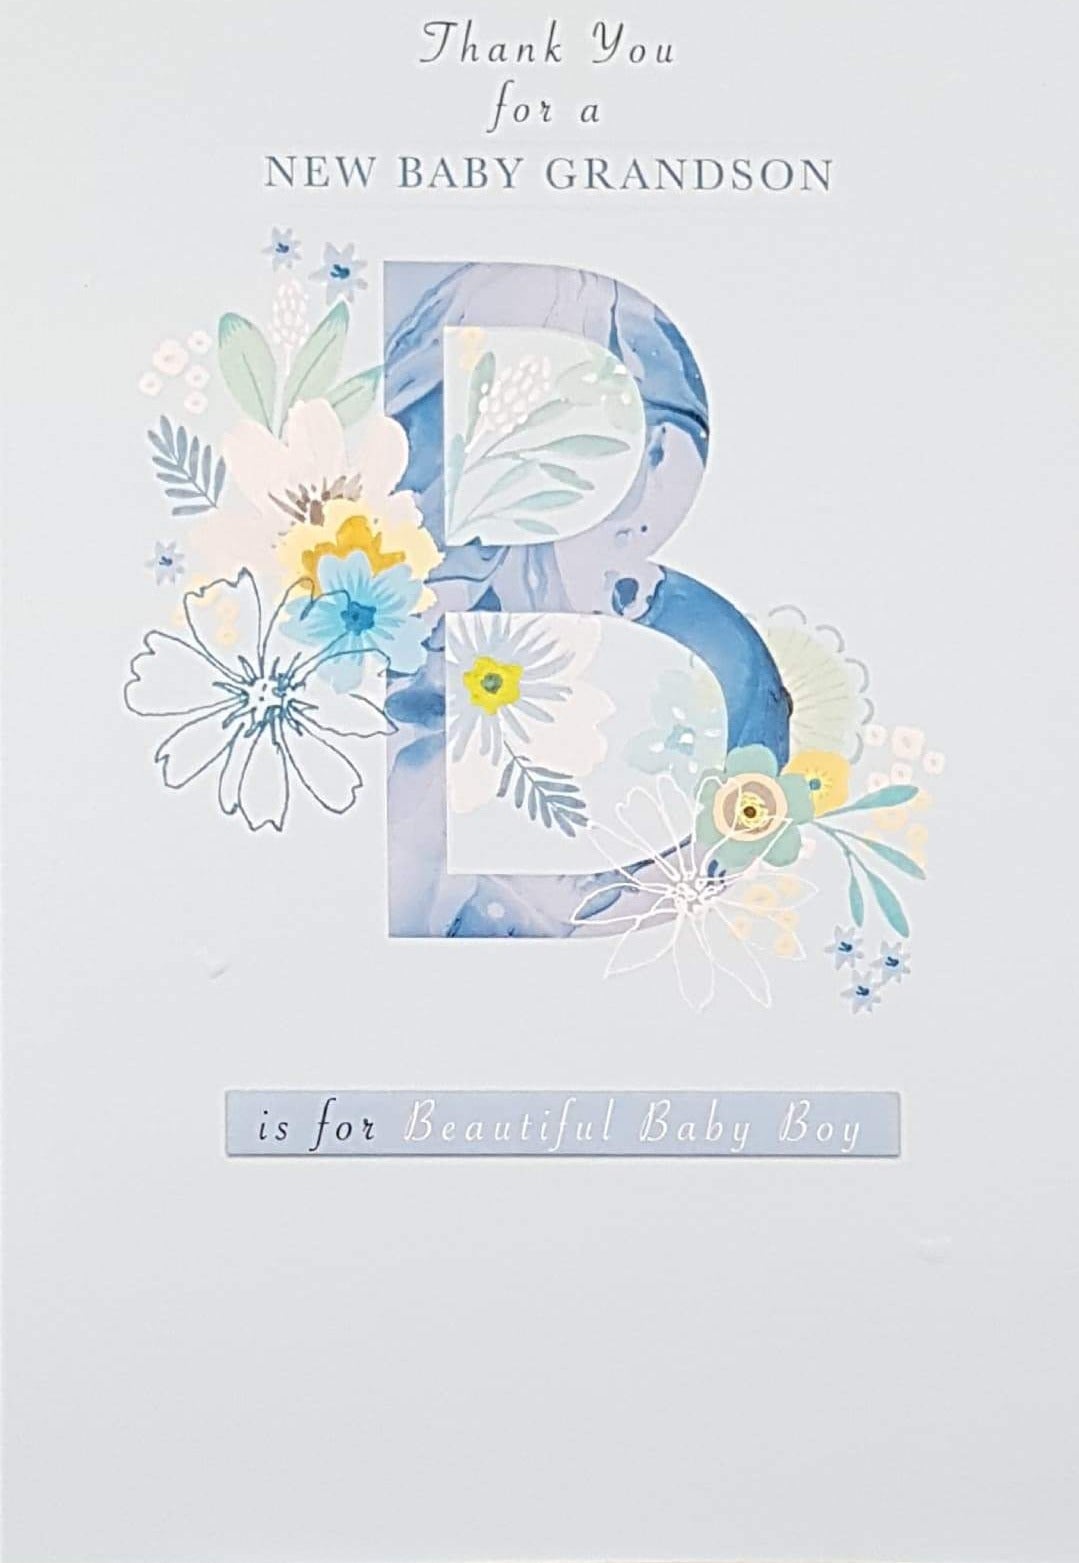 New Baby Card - Boy (Grandson) / Big Blue 'B' Decorated By Flowers